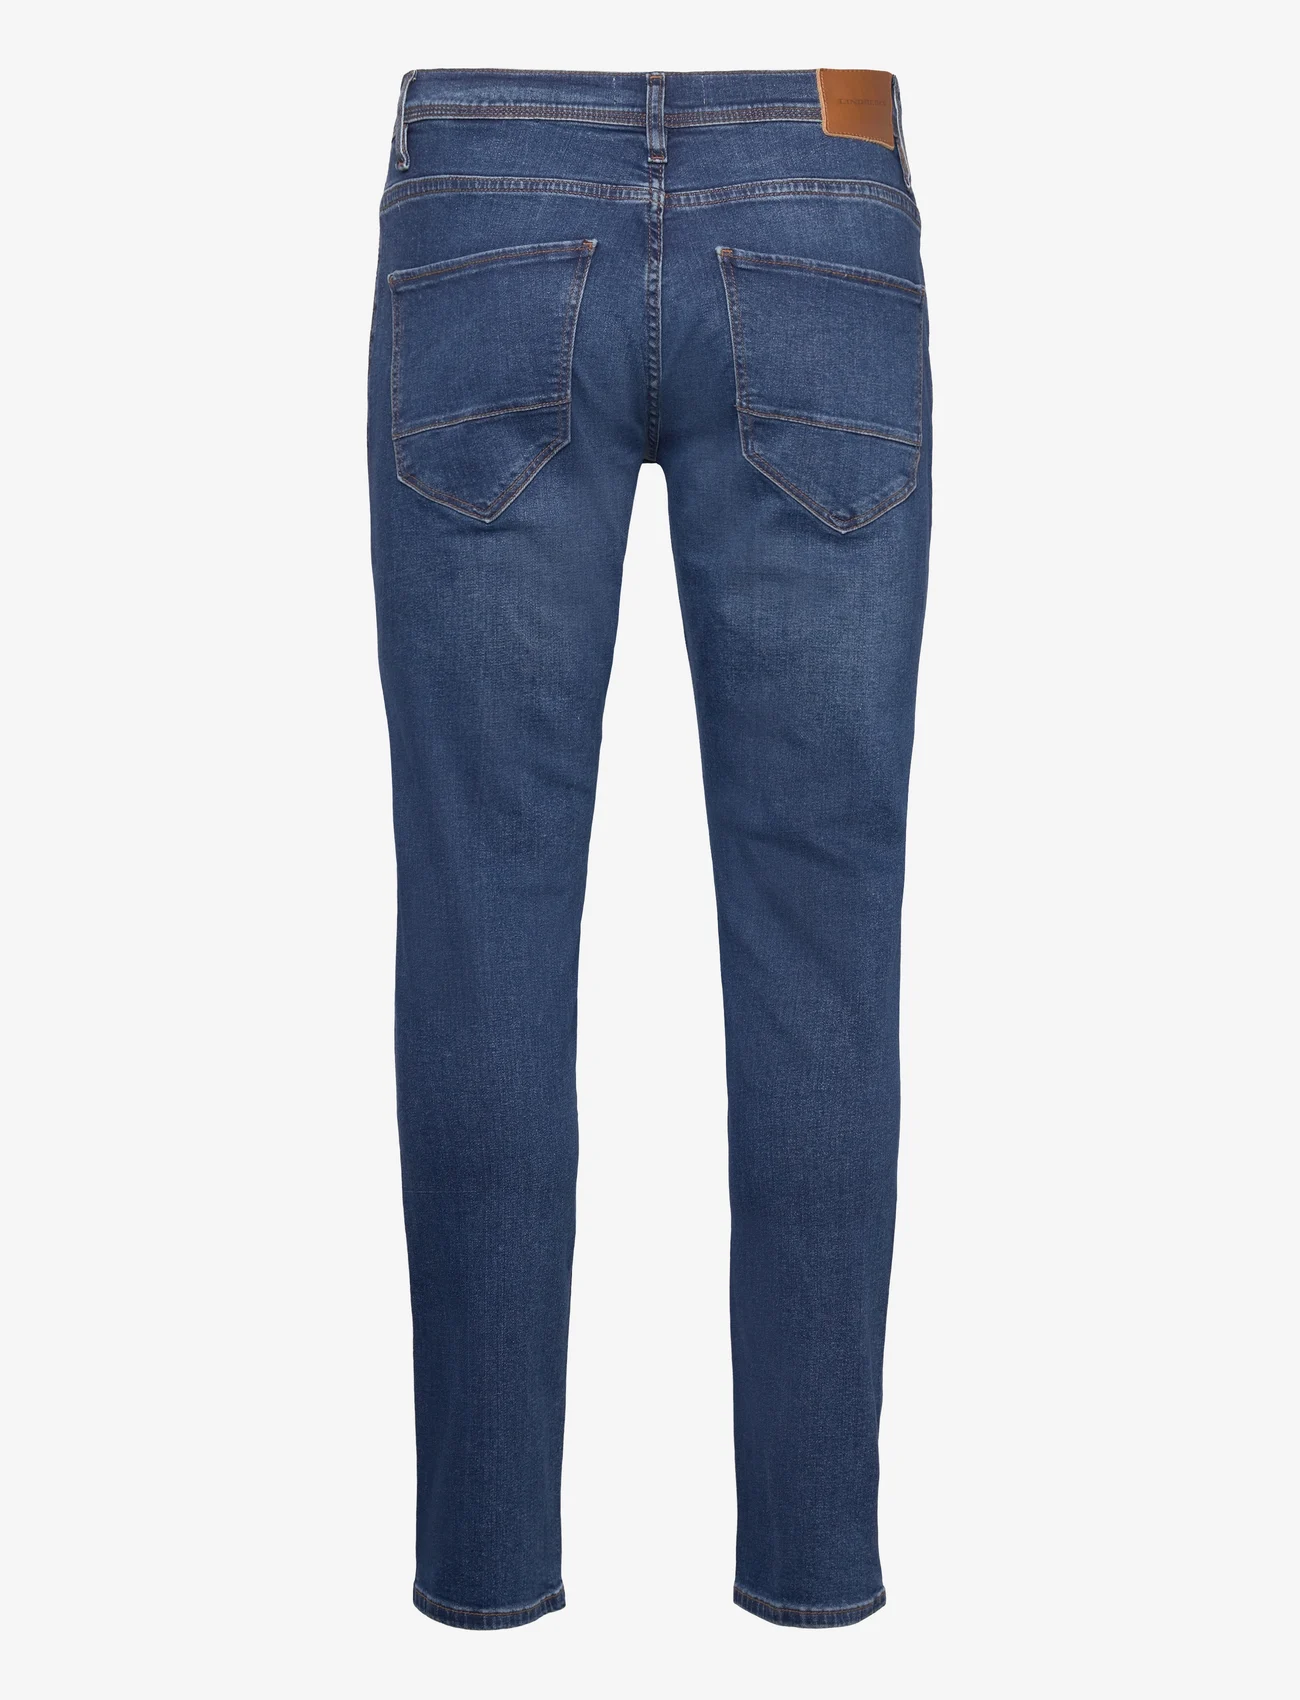 Lindbergh - Tapered Fit Superflex Jeans - tapered jeans - original blue - 1